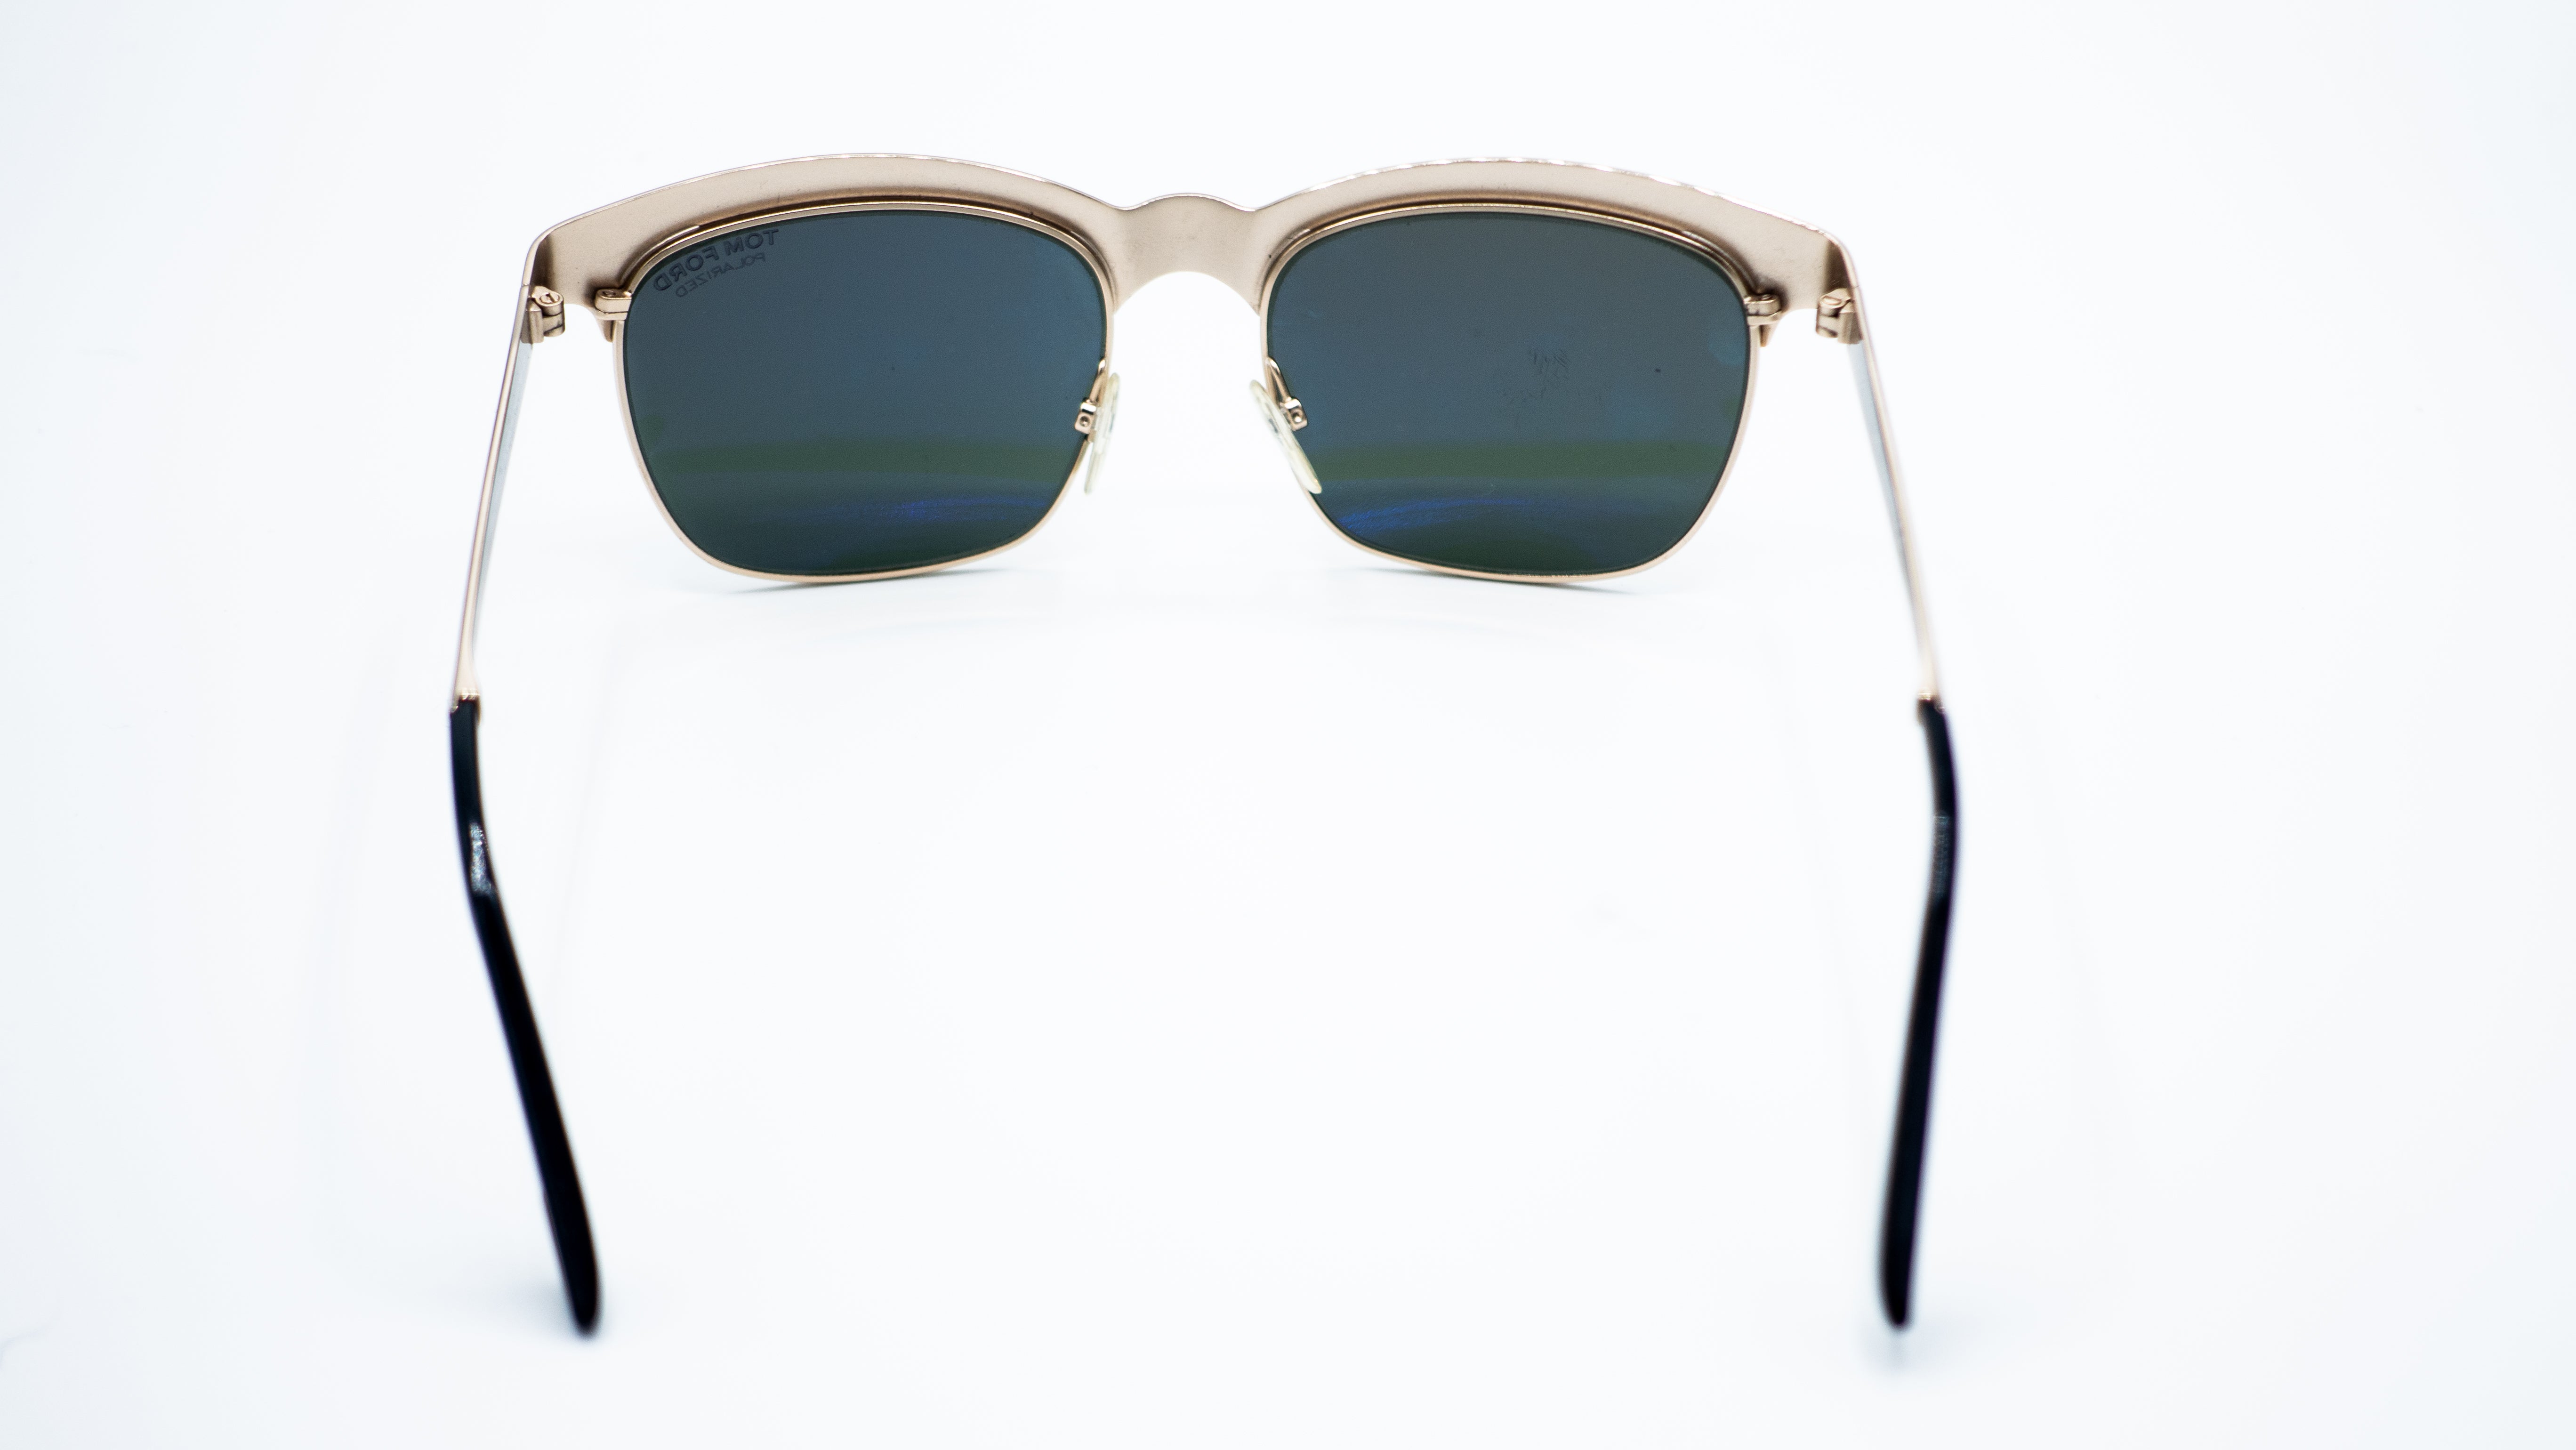 Vintage Tom Ford Black Sunglasses